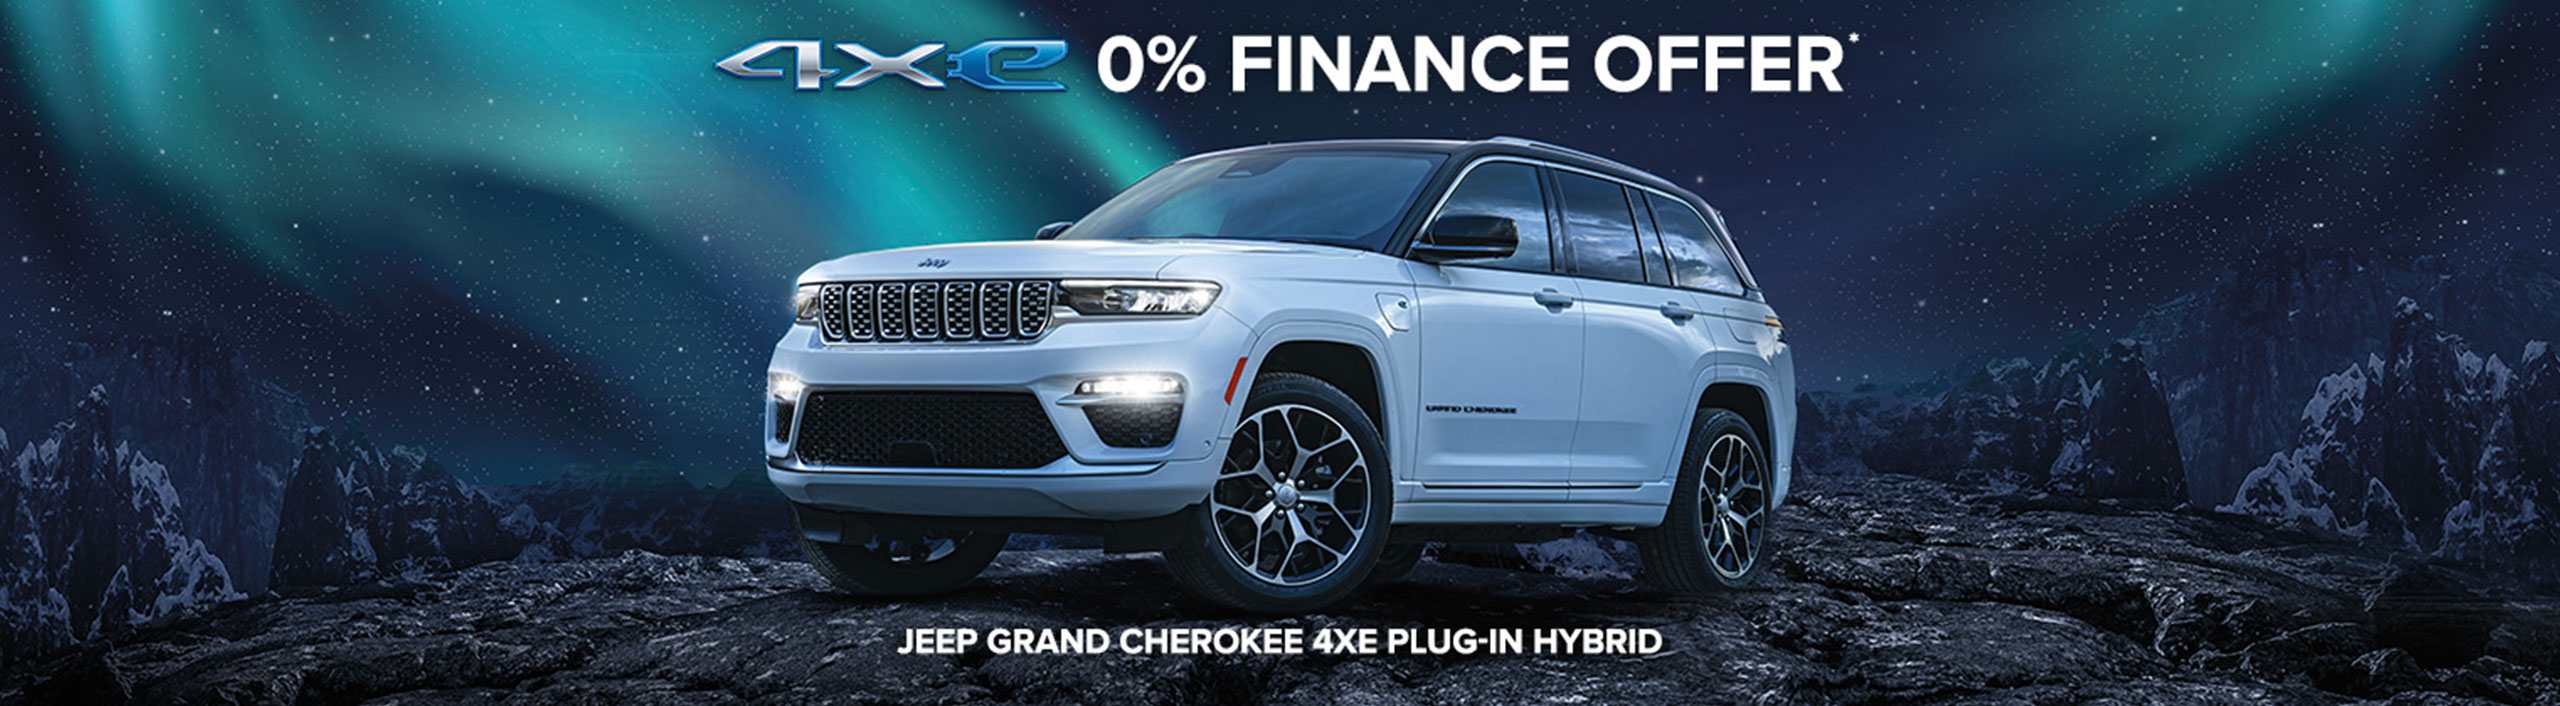 Grand Cherokee 4xe 0% Finance Offer